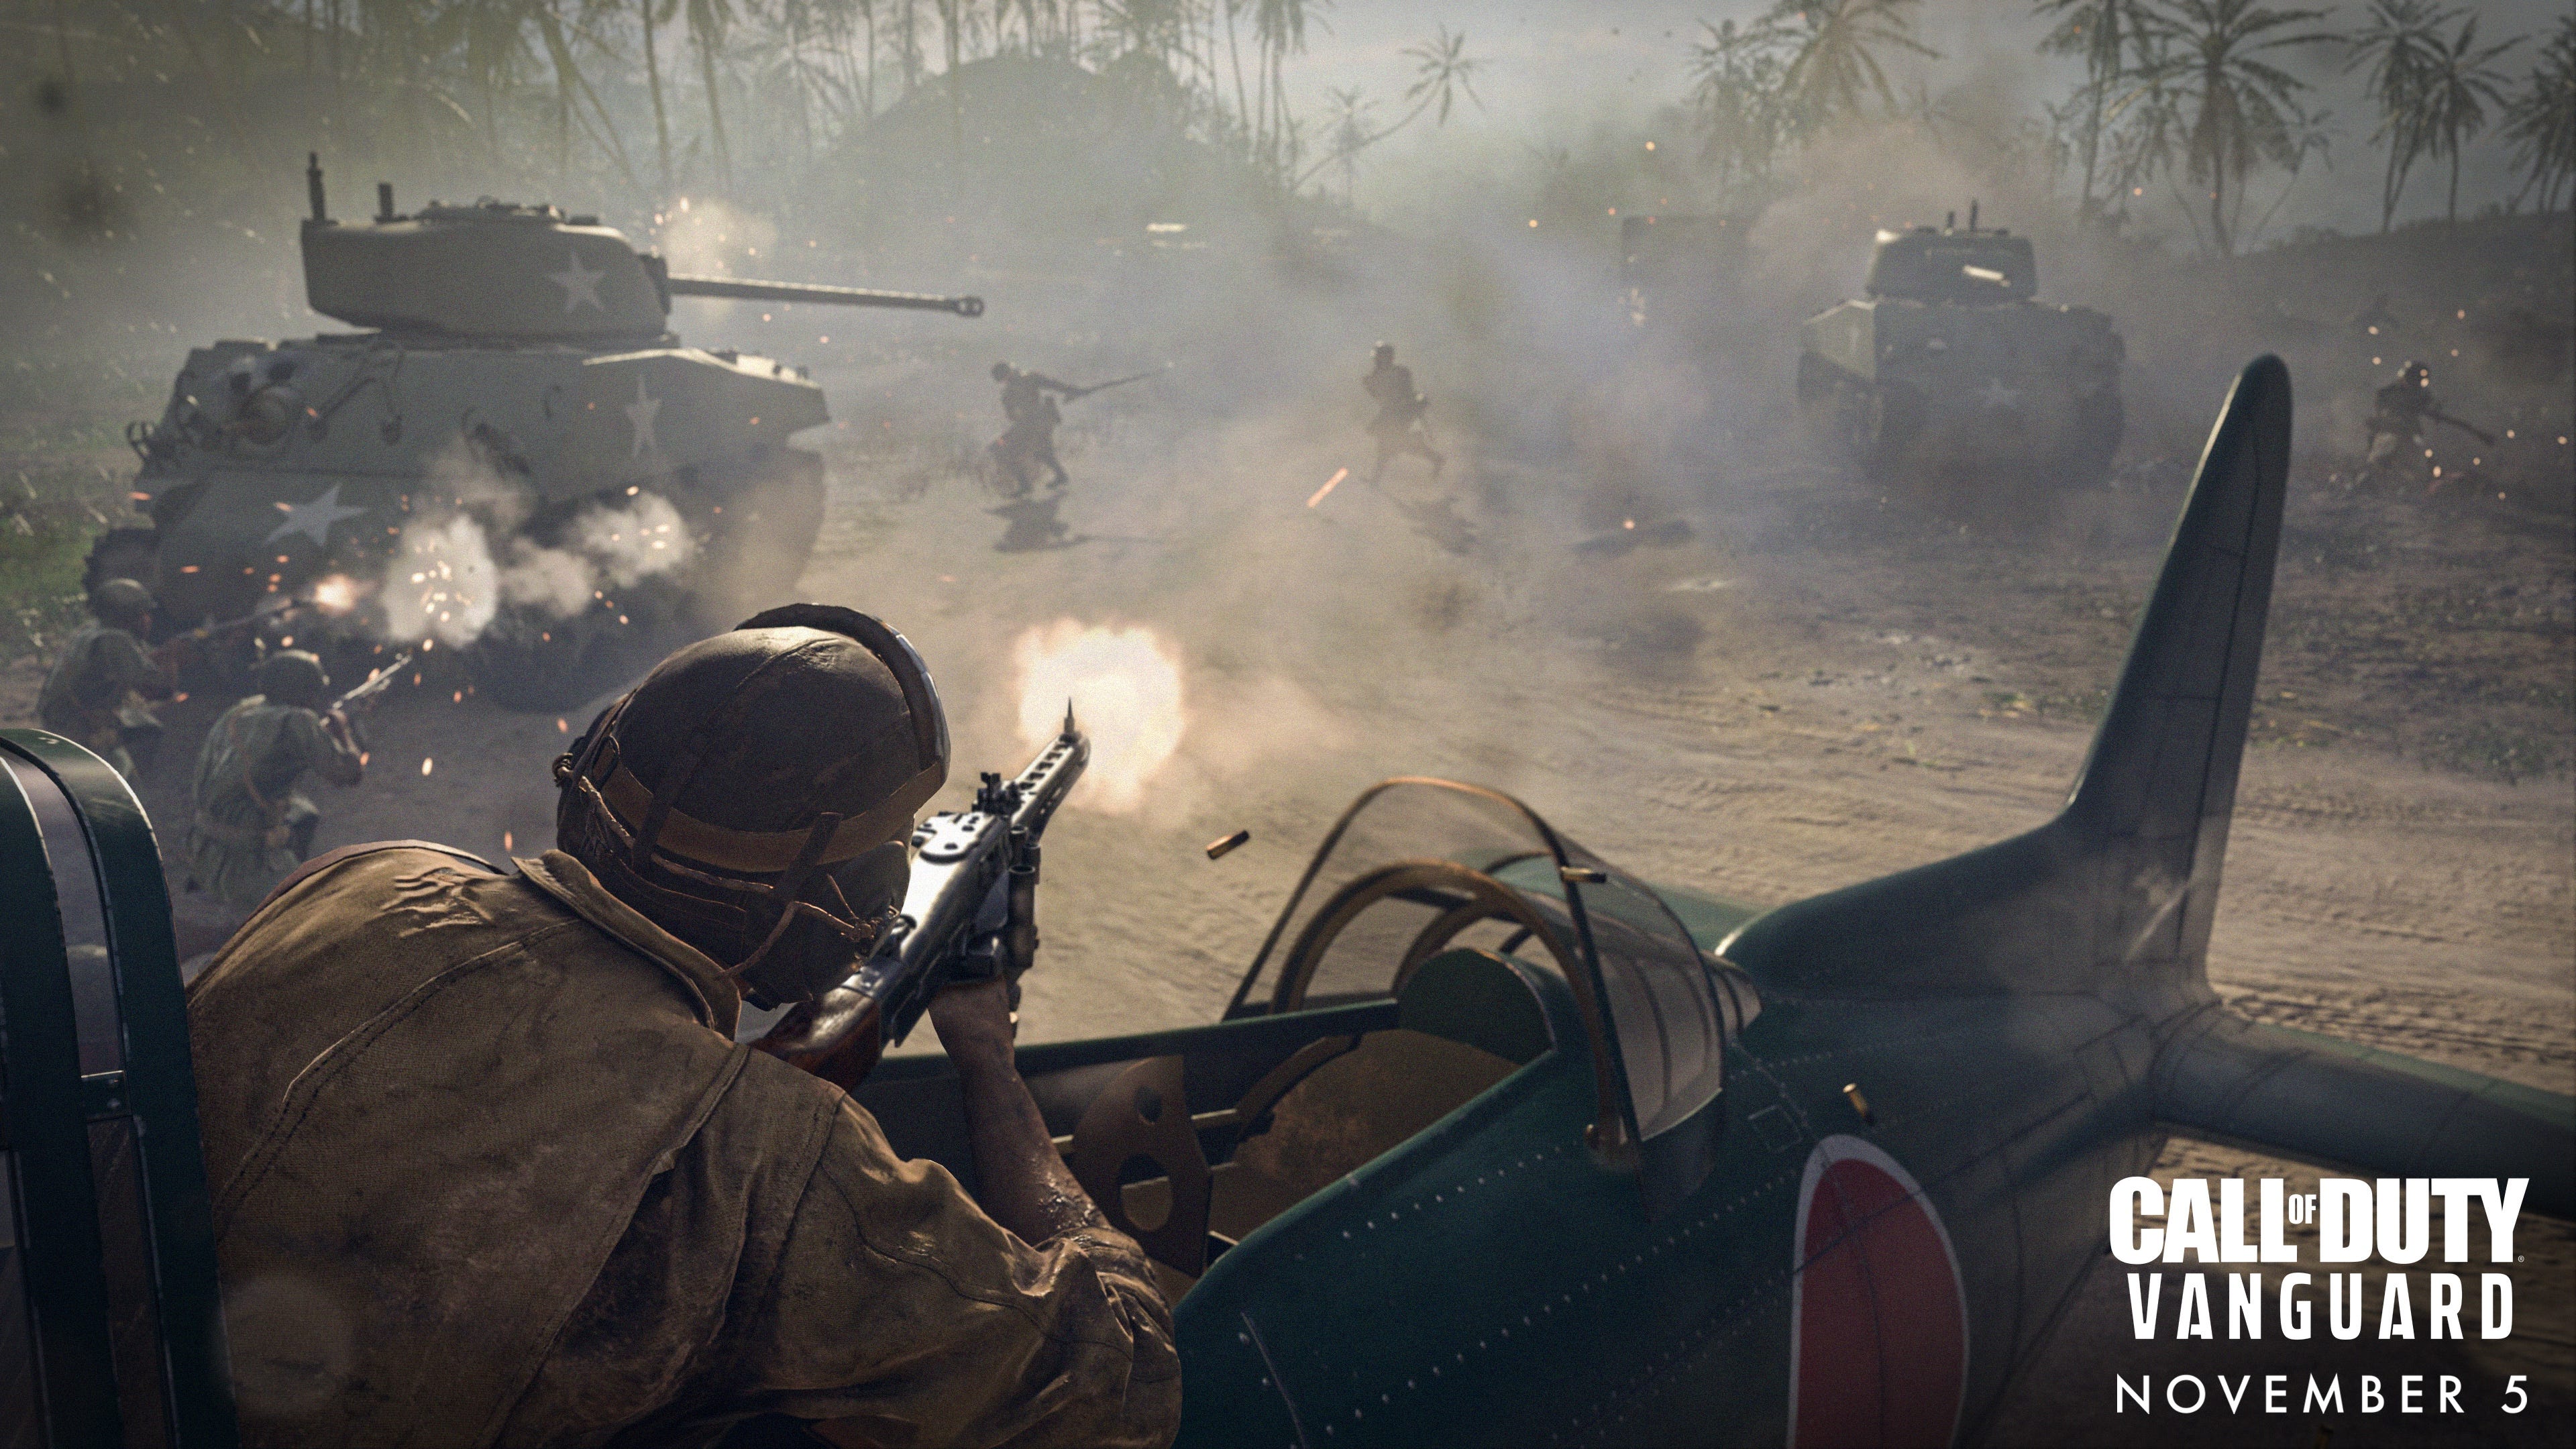 Call of Duty: Vanguard, out Nov. returns to World War II